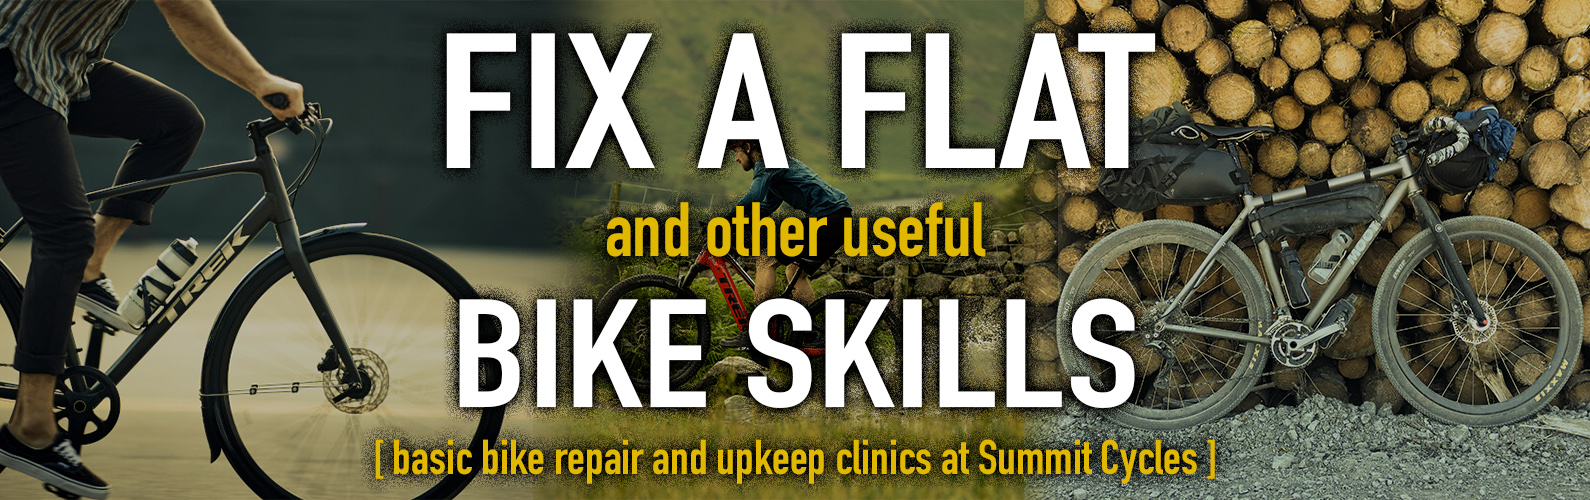 Fix a Flat clinics